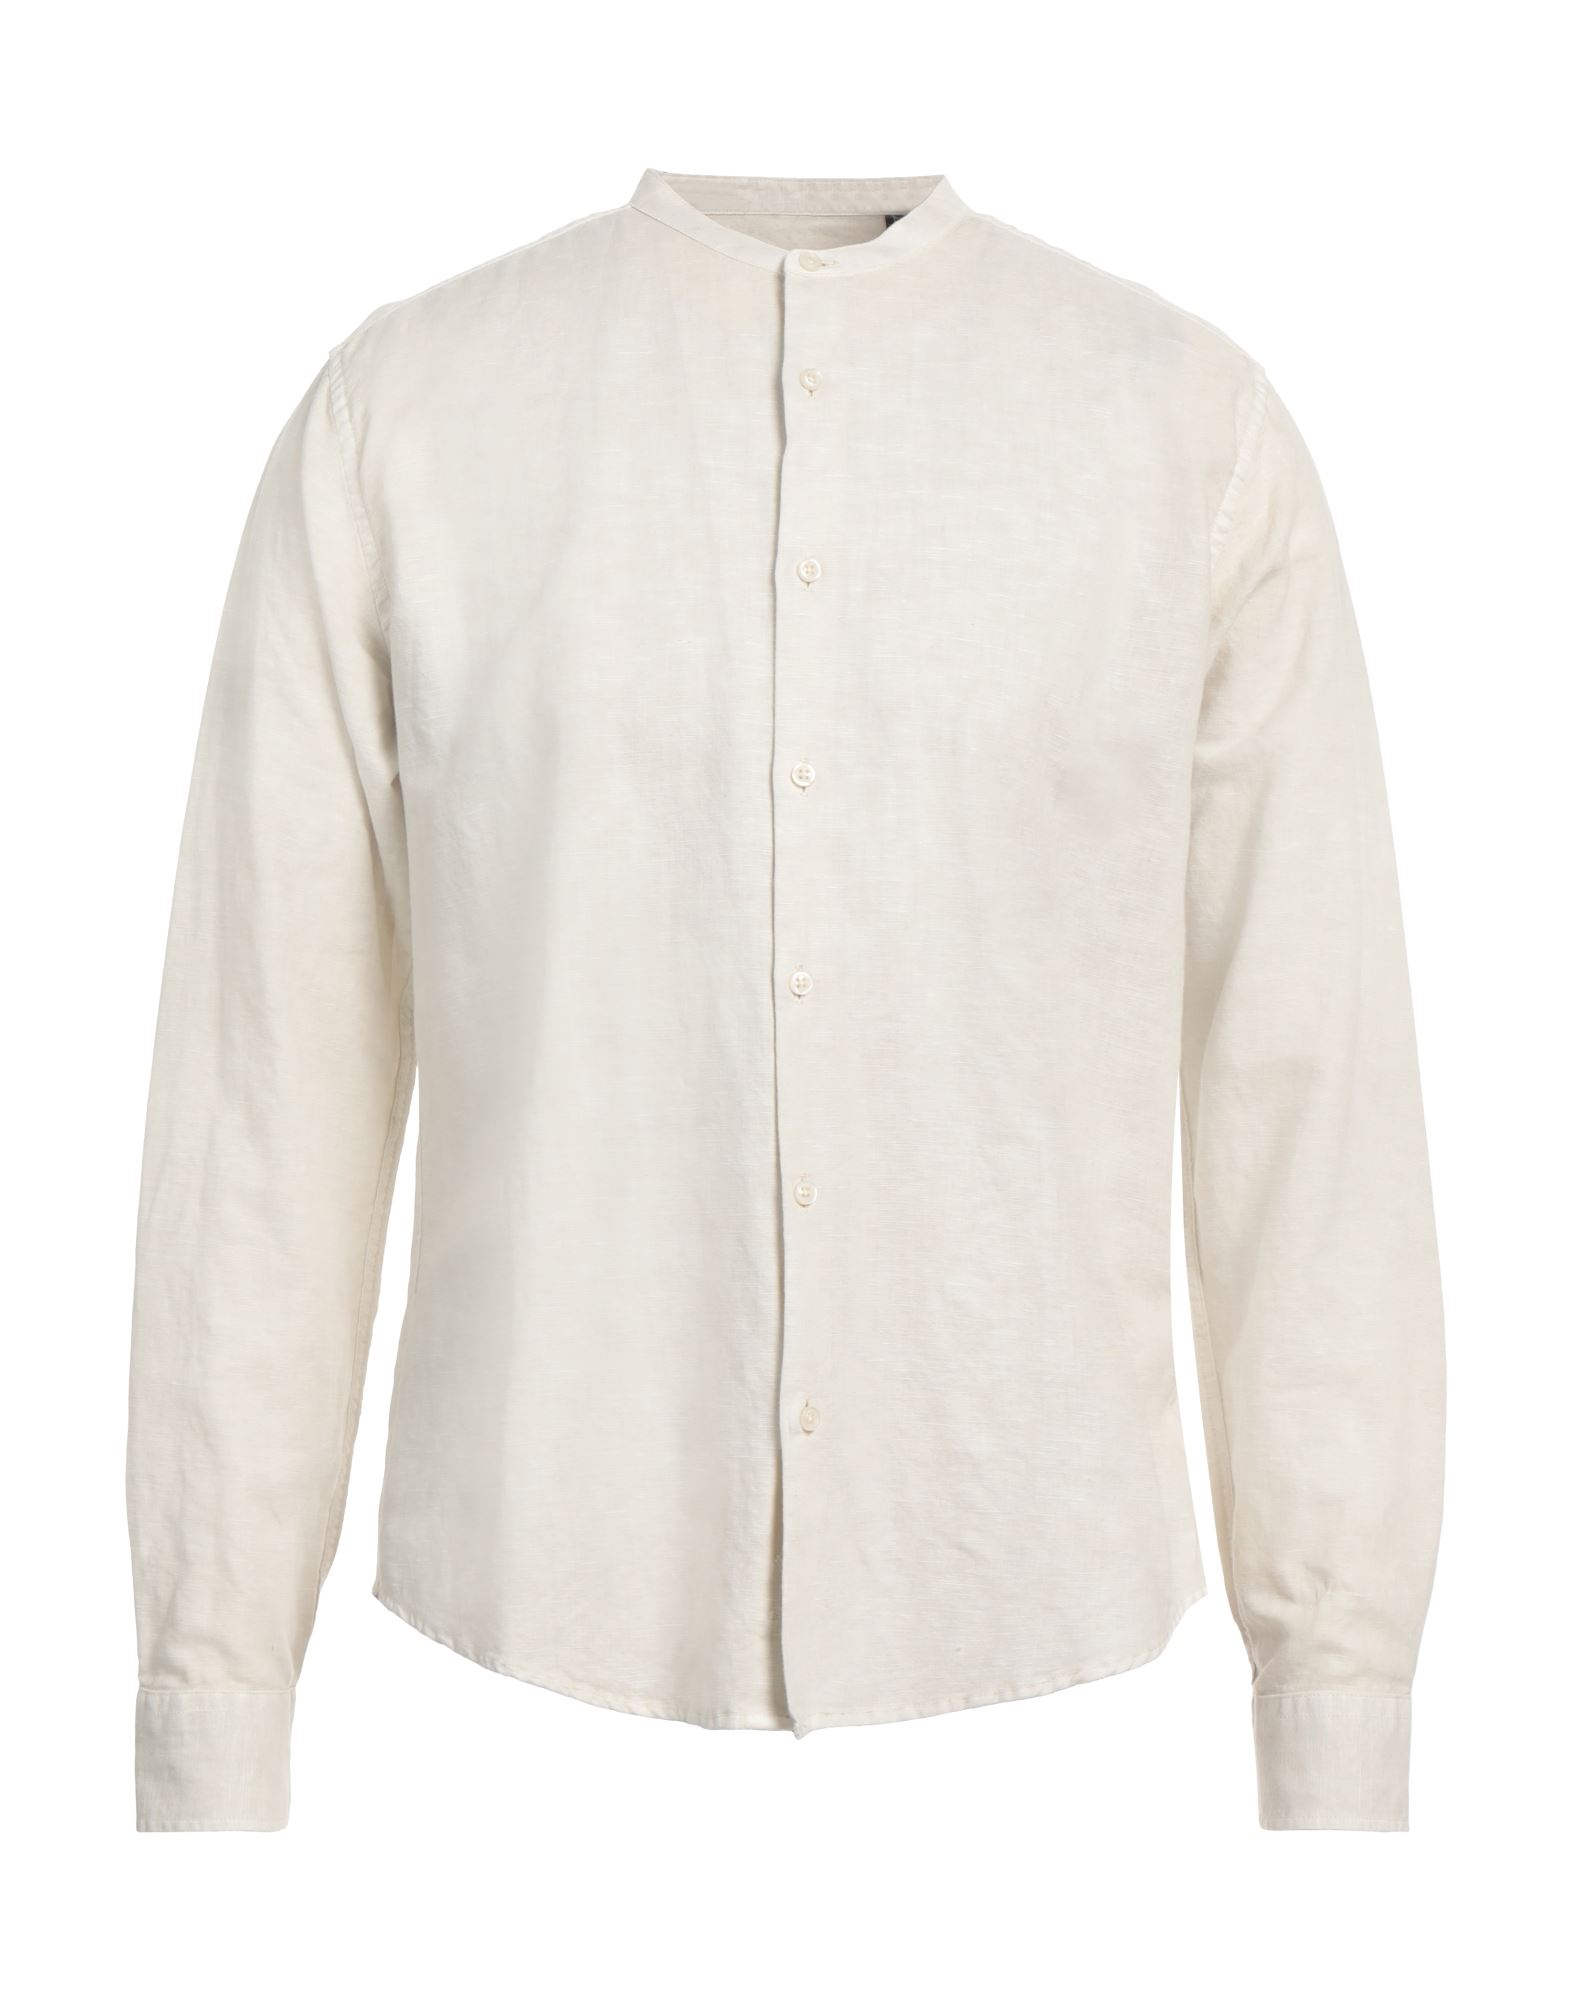 Homeward Clothes Shirts In White